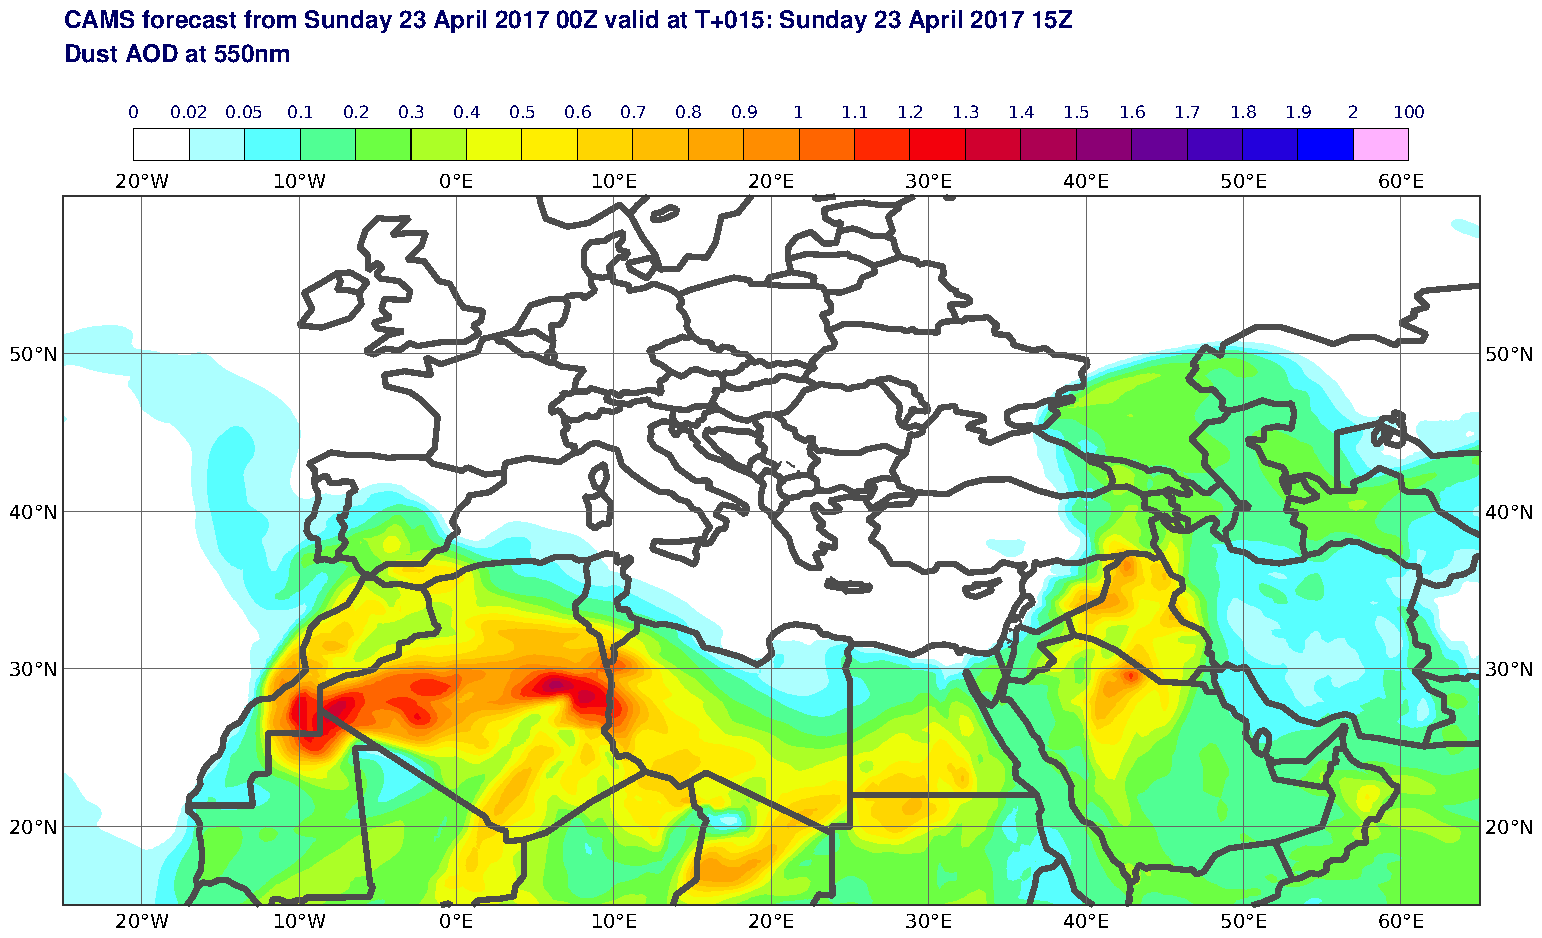 Dust AOD at 550nm valid at T15 - 2017-04-23 15:00